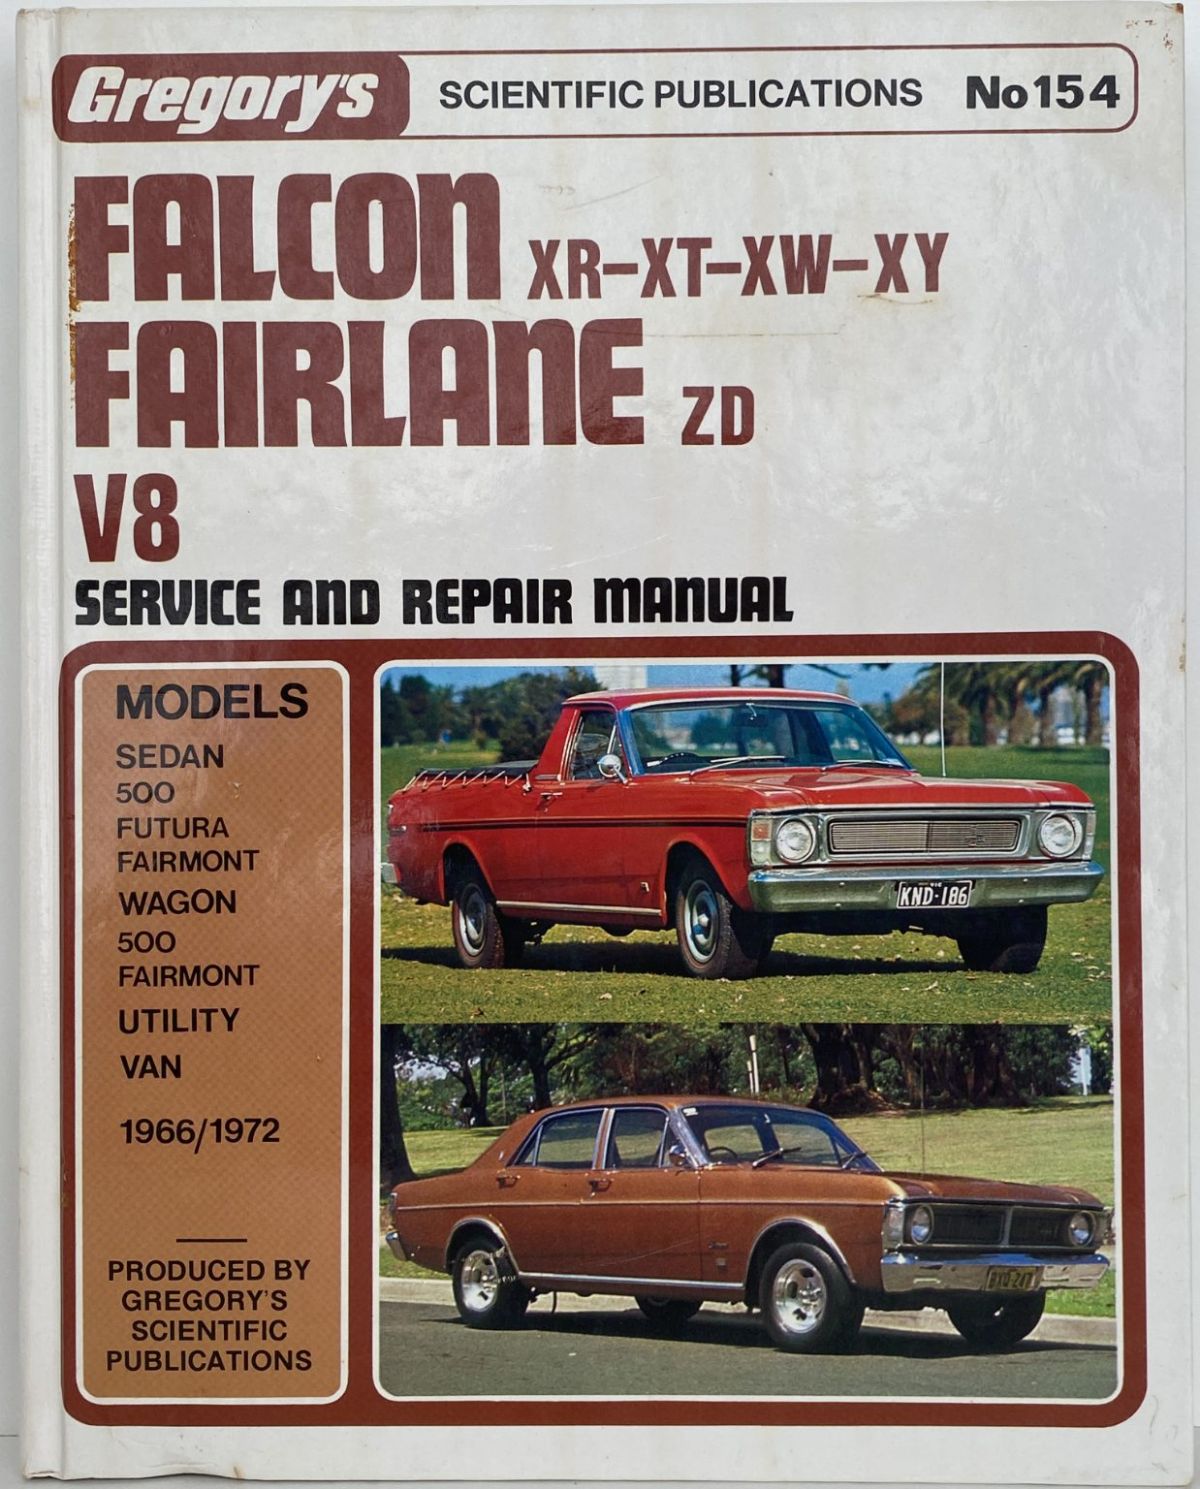 FORD FALCON XR - XT - XW - XY and Fairlane ZD Repair Manual